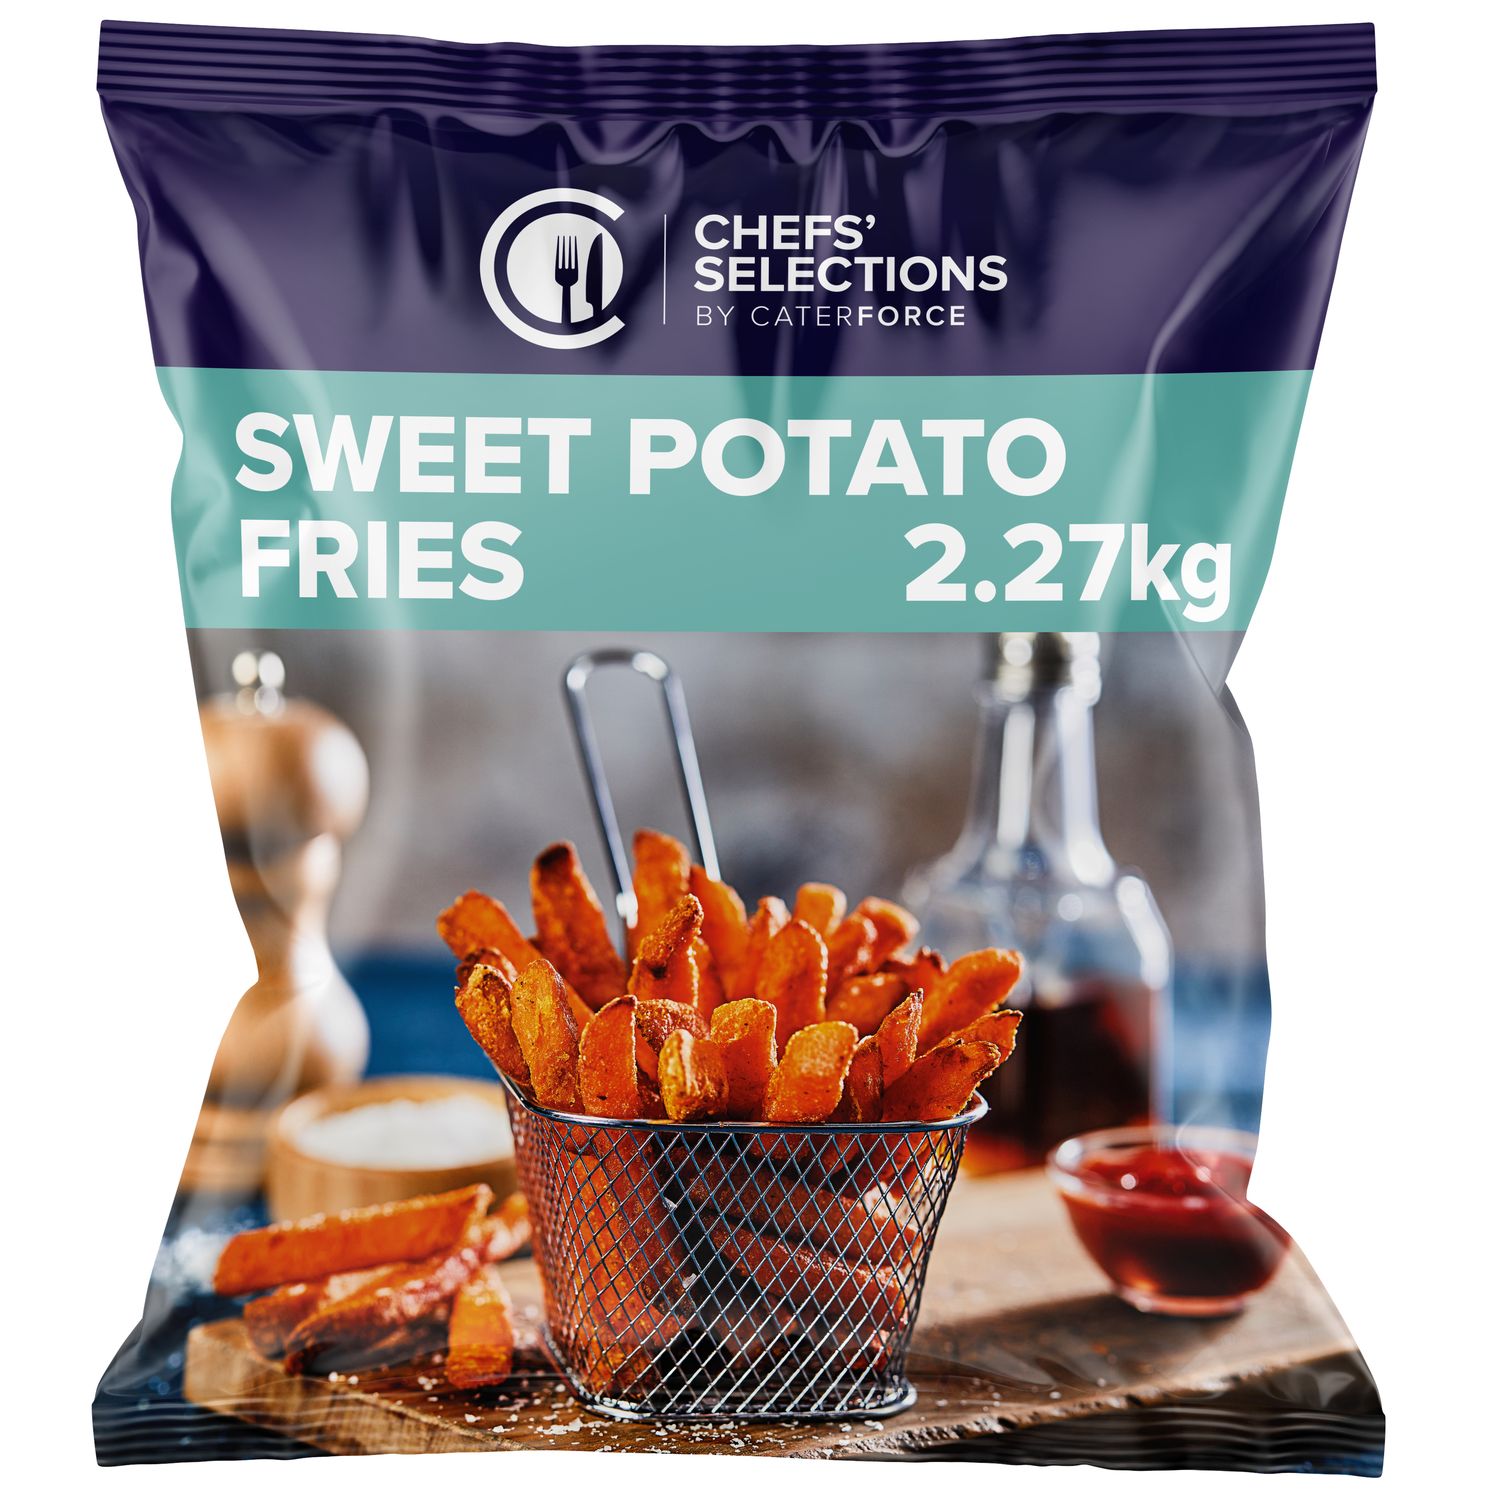 Chefs’ Selections Sweet Potato Fries (4 x 2.27kg)